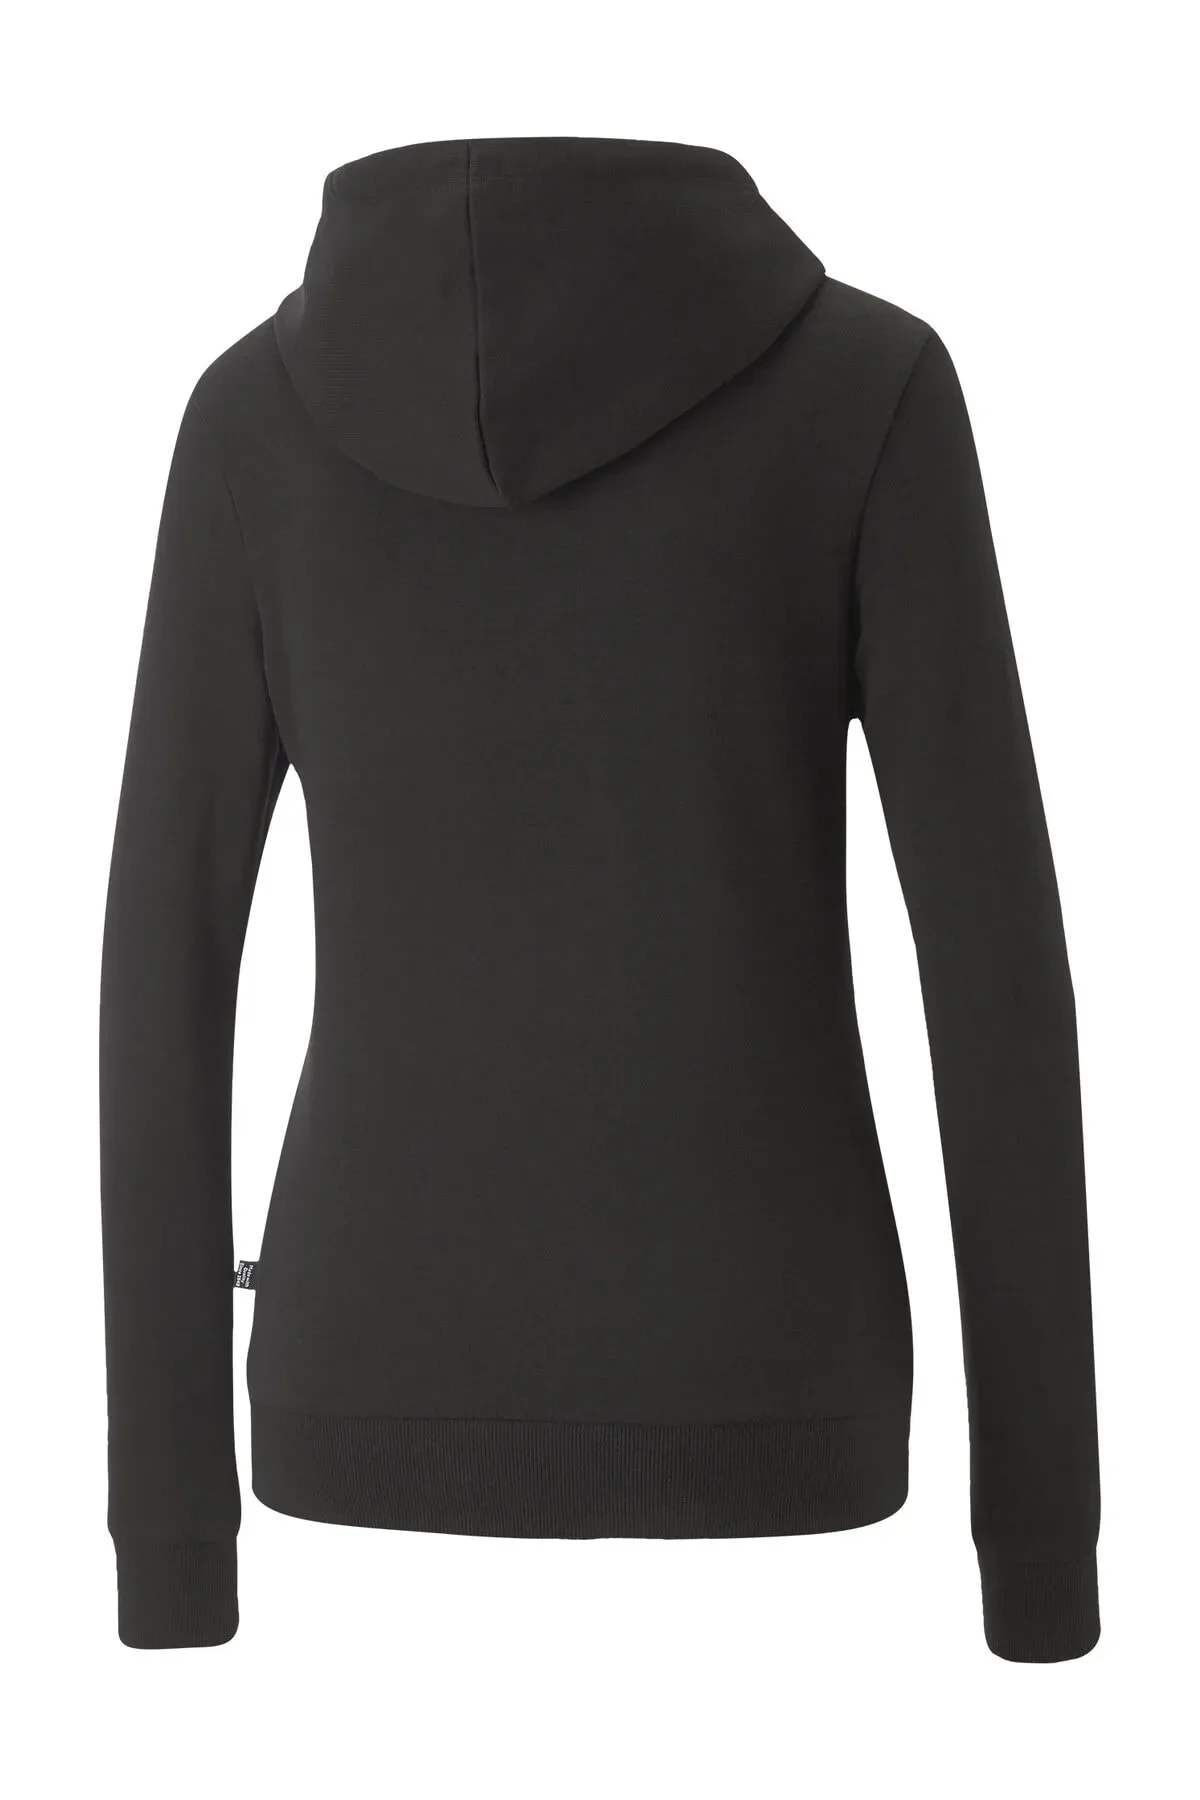 Essential+ Embroidery Kadın Günlük Stil Sweatshirt 848332-Siyah - 5